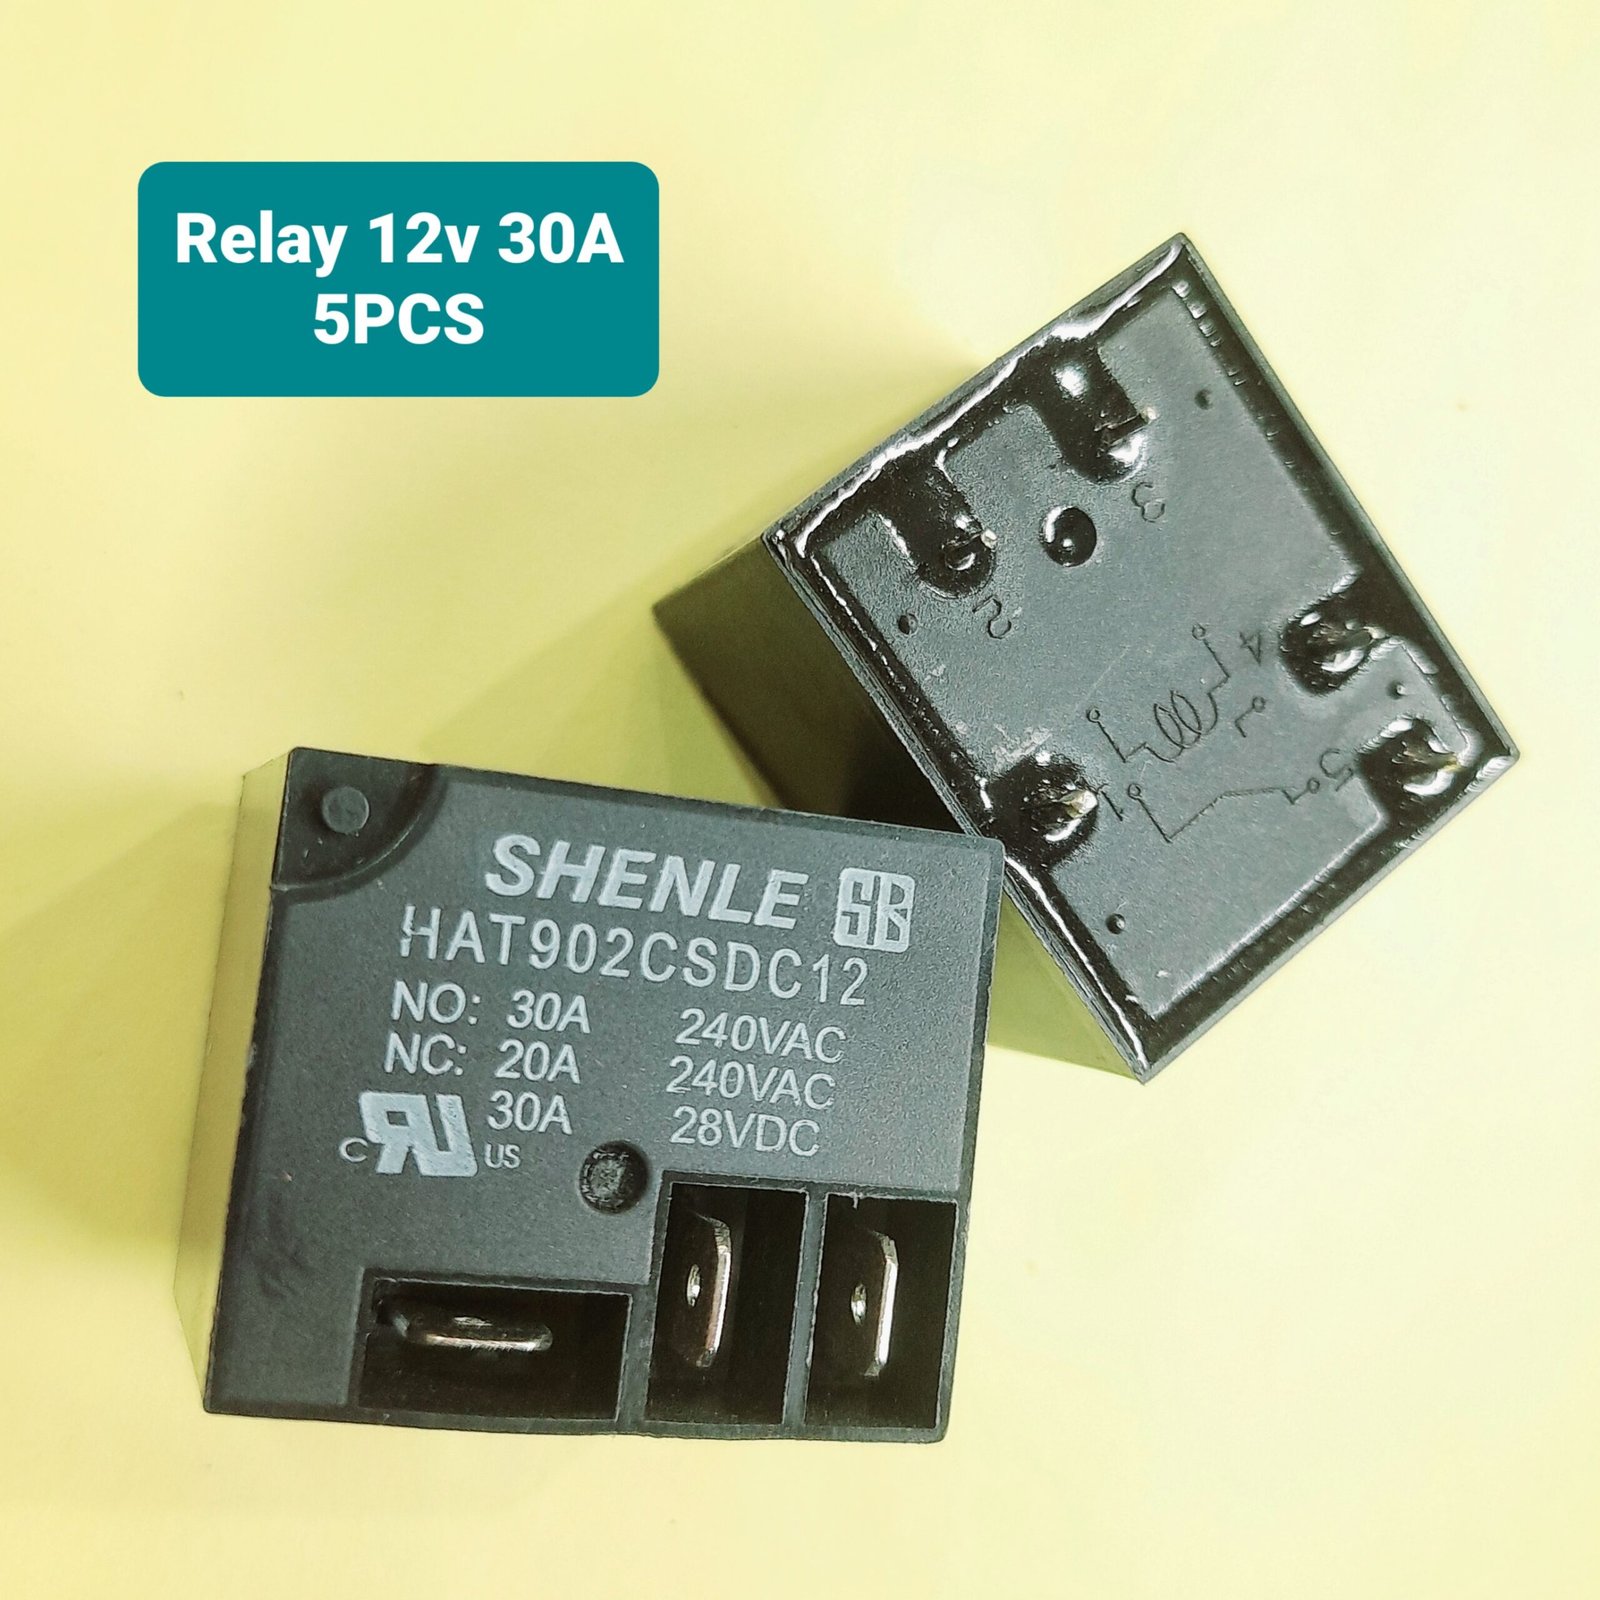 5PCS) SHENLE Relay 12v 30A MT (HAT902CSDC12) - Power Tak